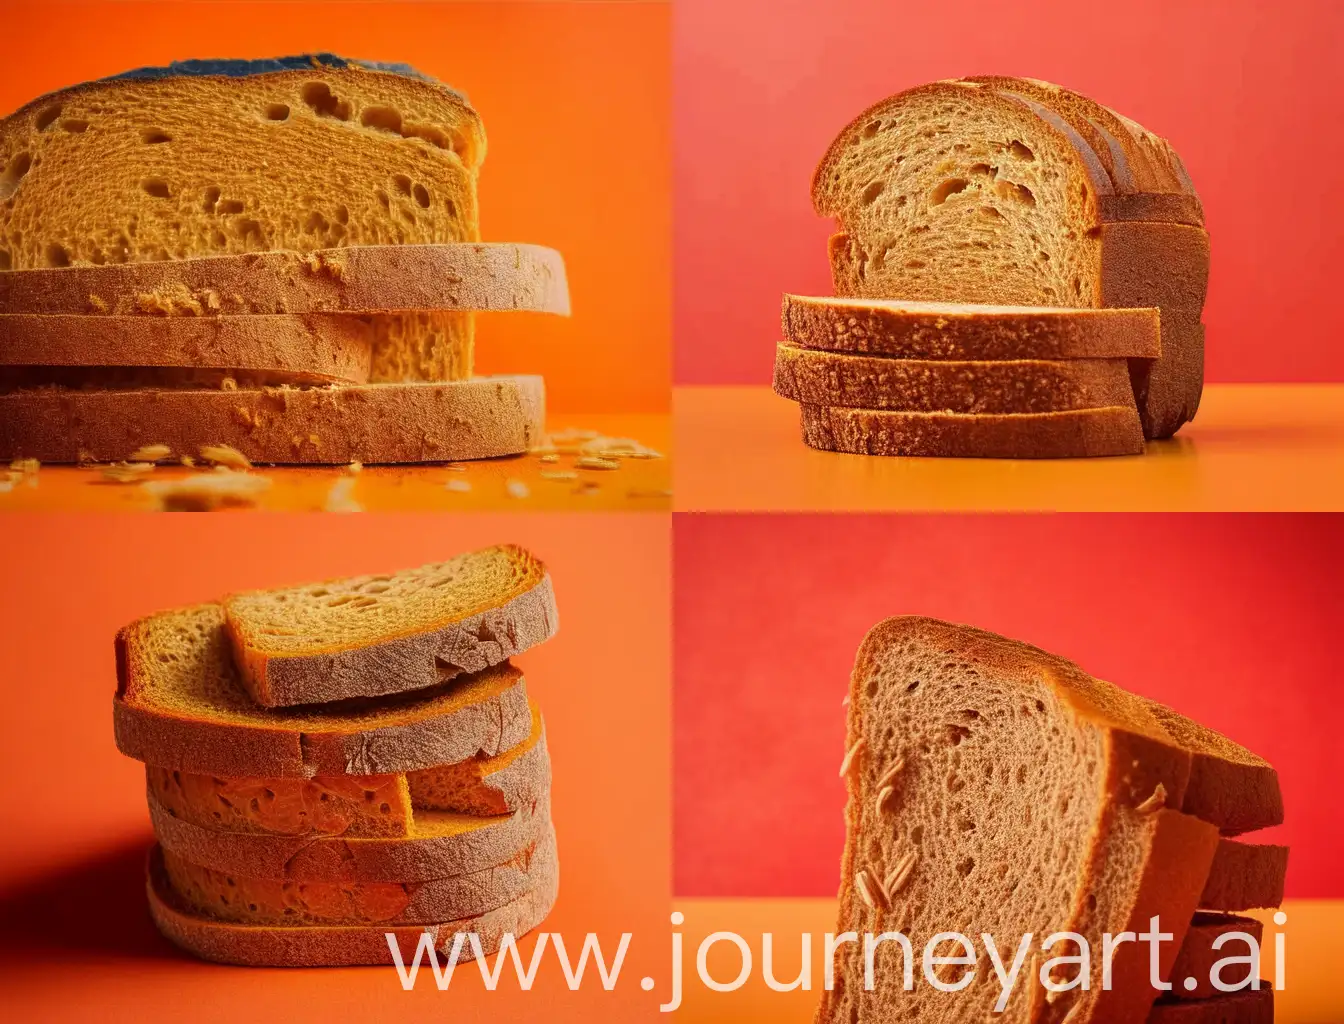 Stacked-Whole-Wheat-Bread-on-Vibrant-Orange-Background